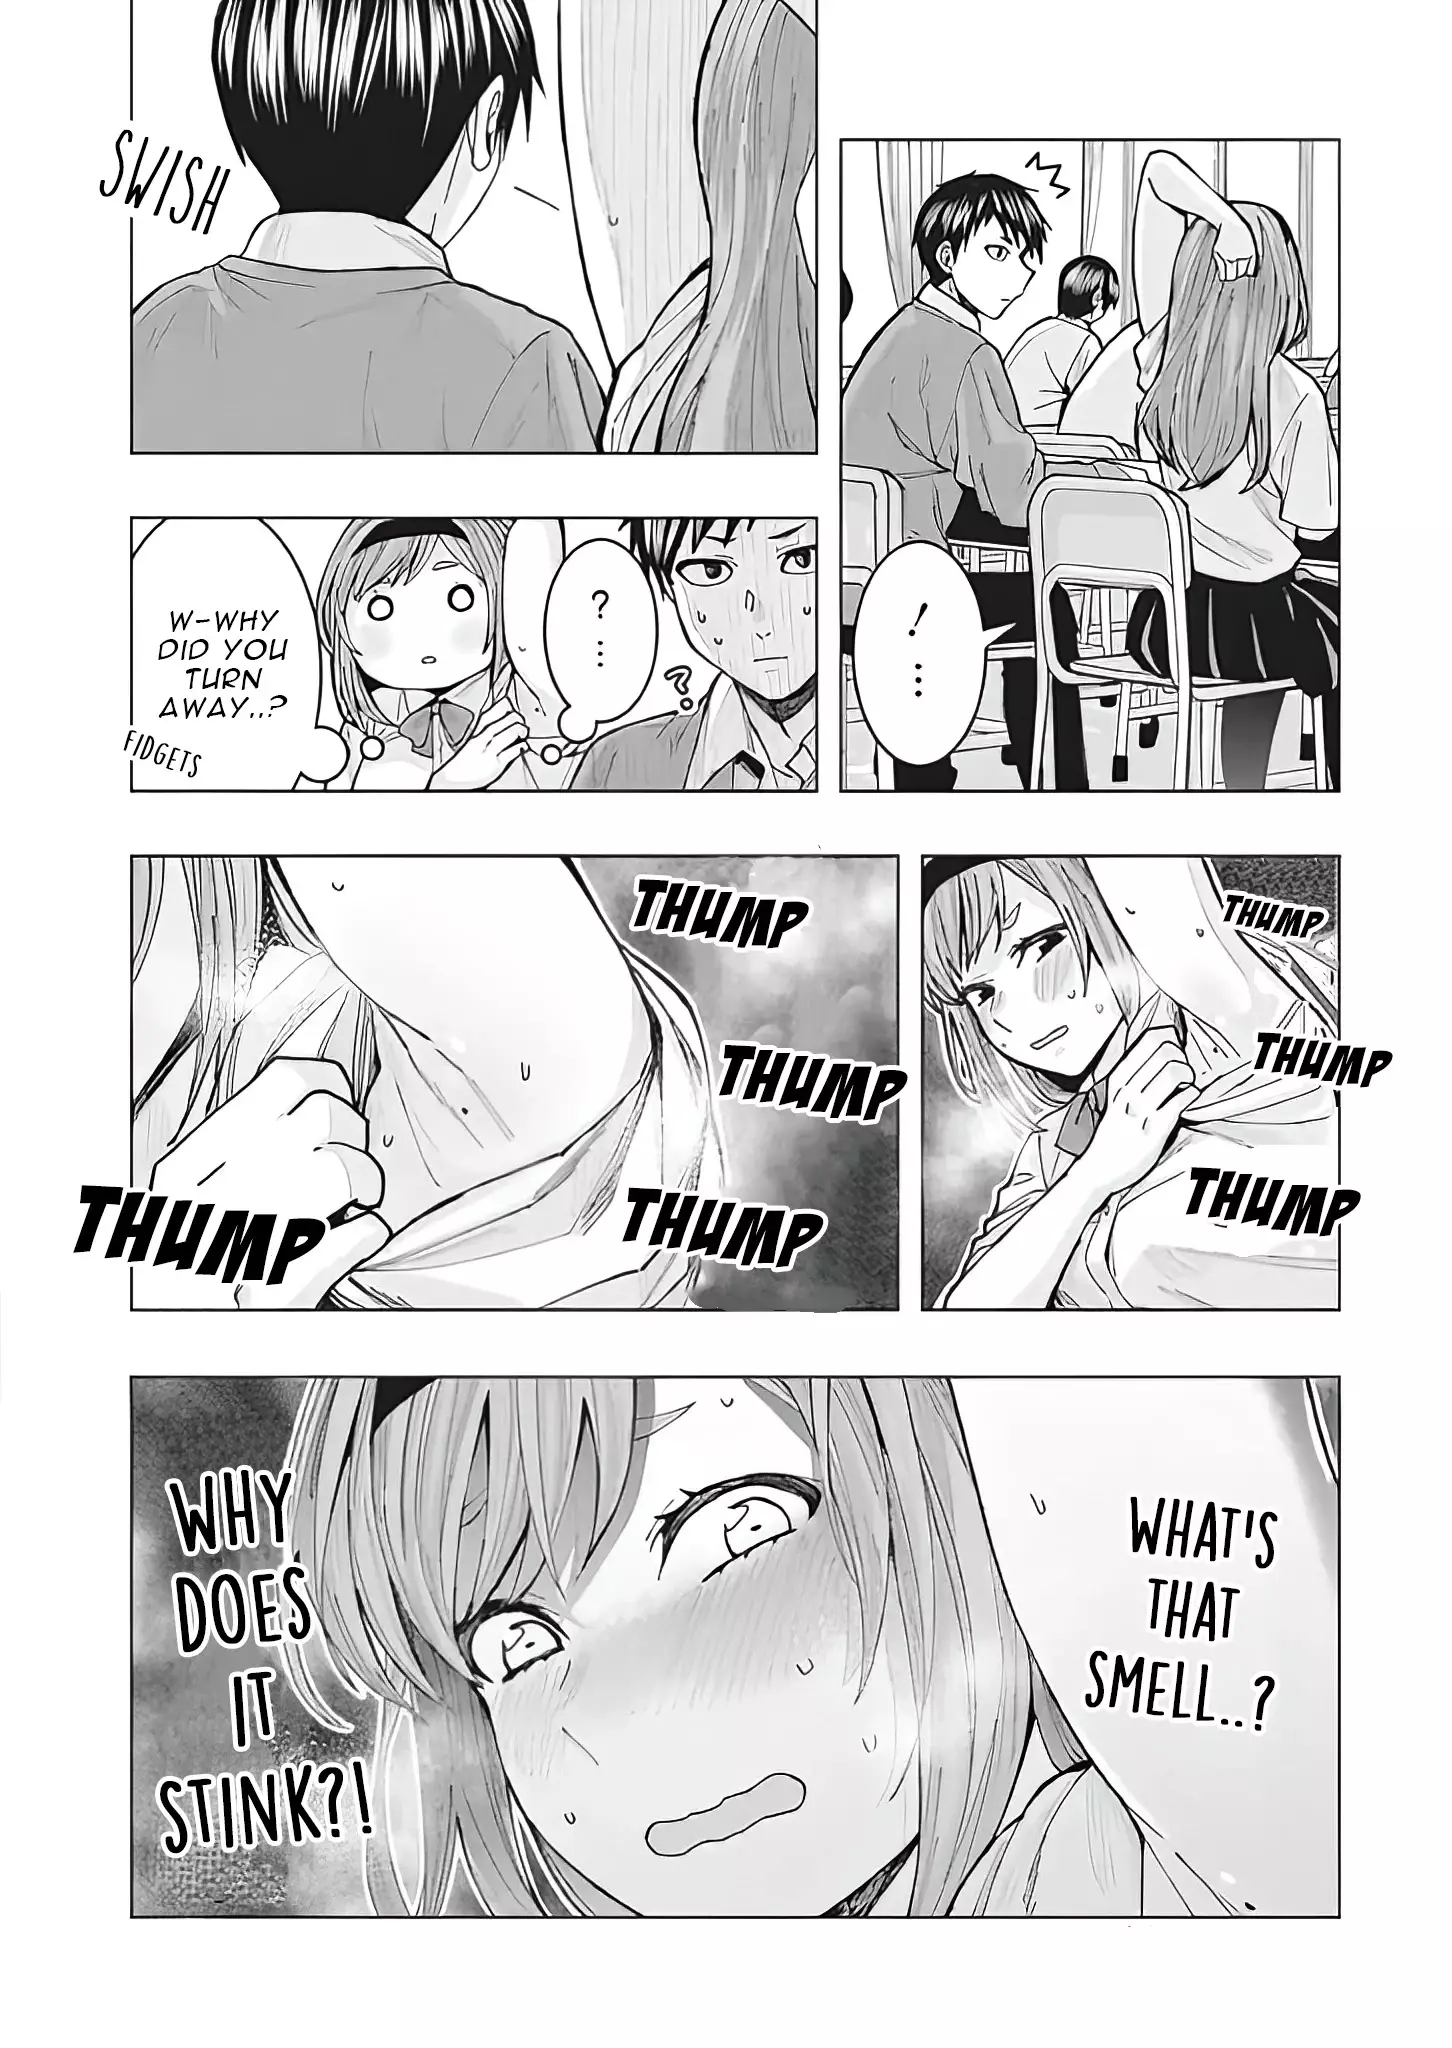 "nobukuni-San" Does She Like Me? - 1 page 11